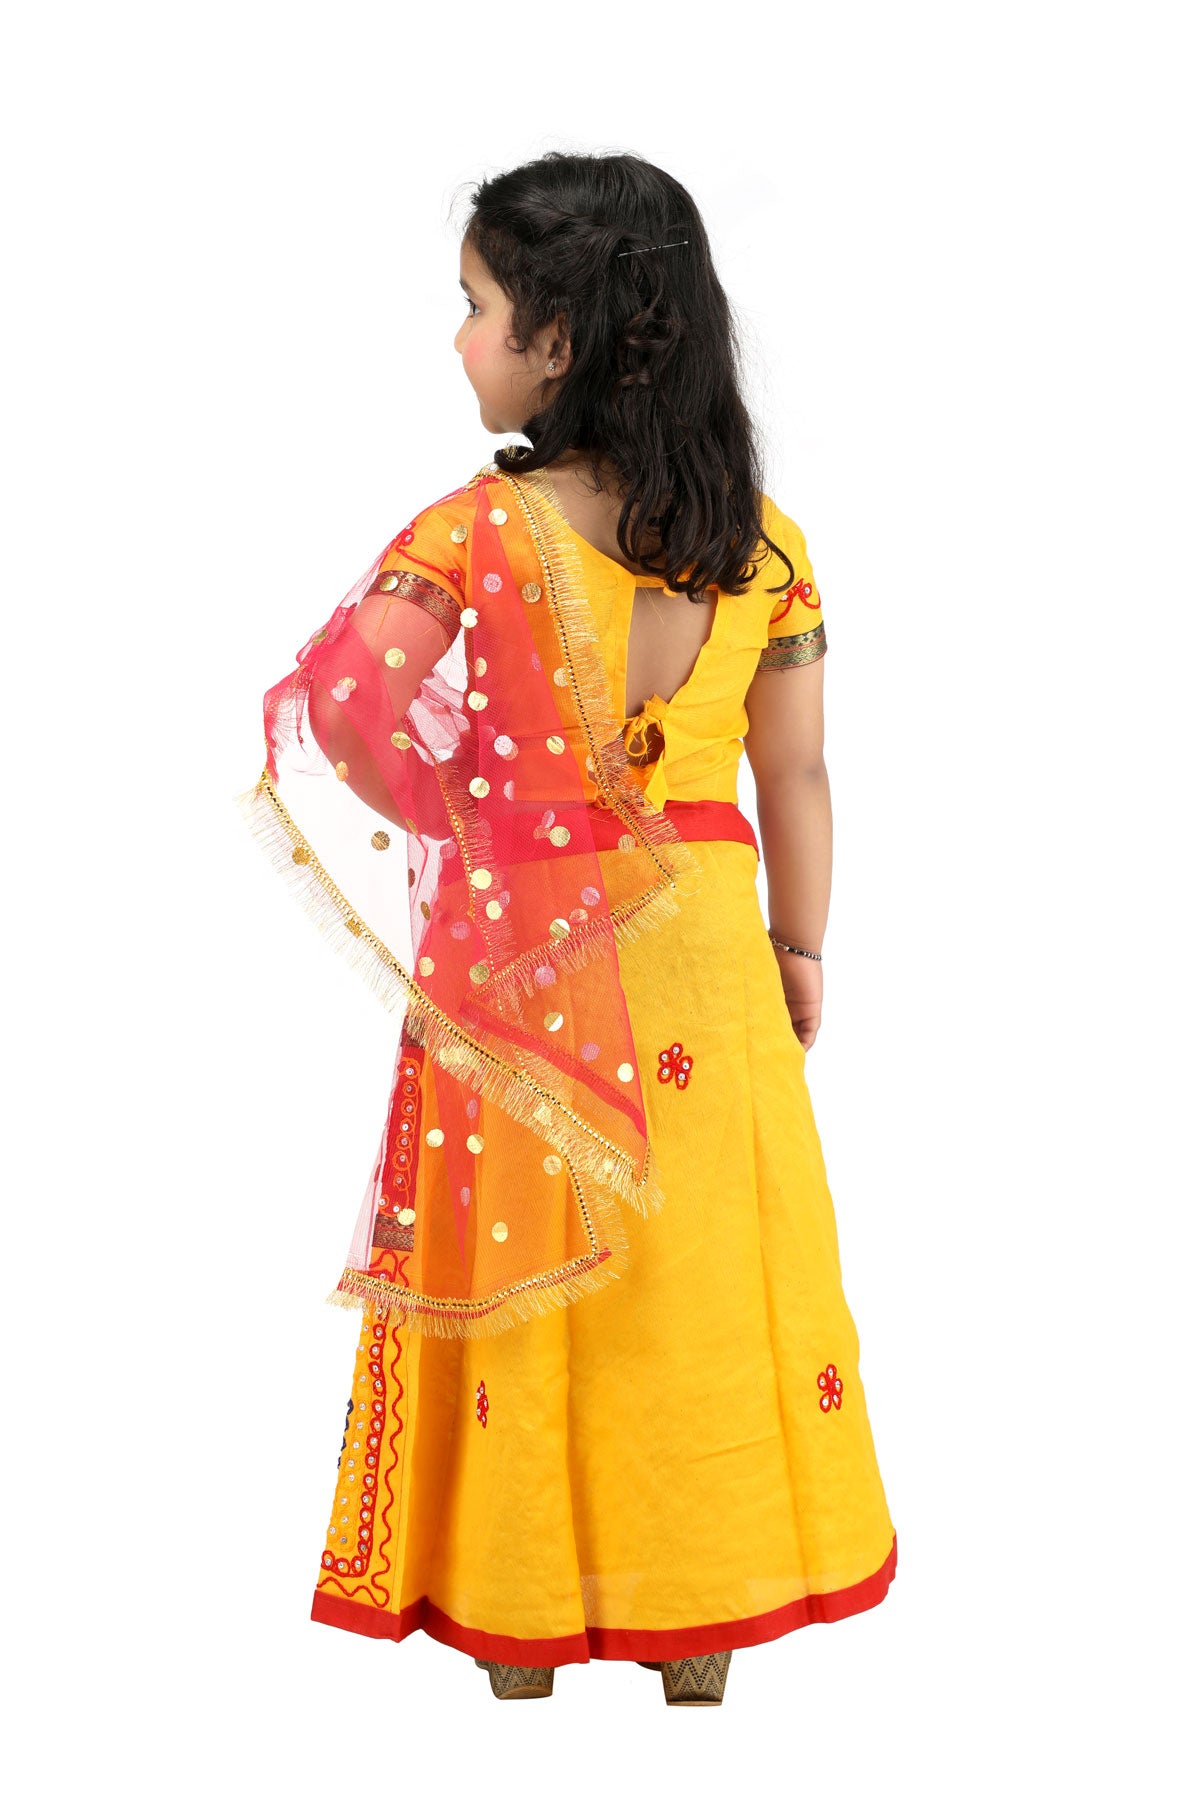 Buy Garba Costumes Online In India - Etsy India